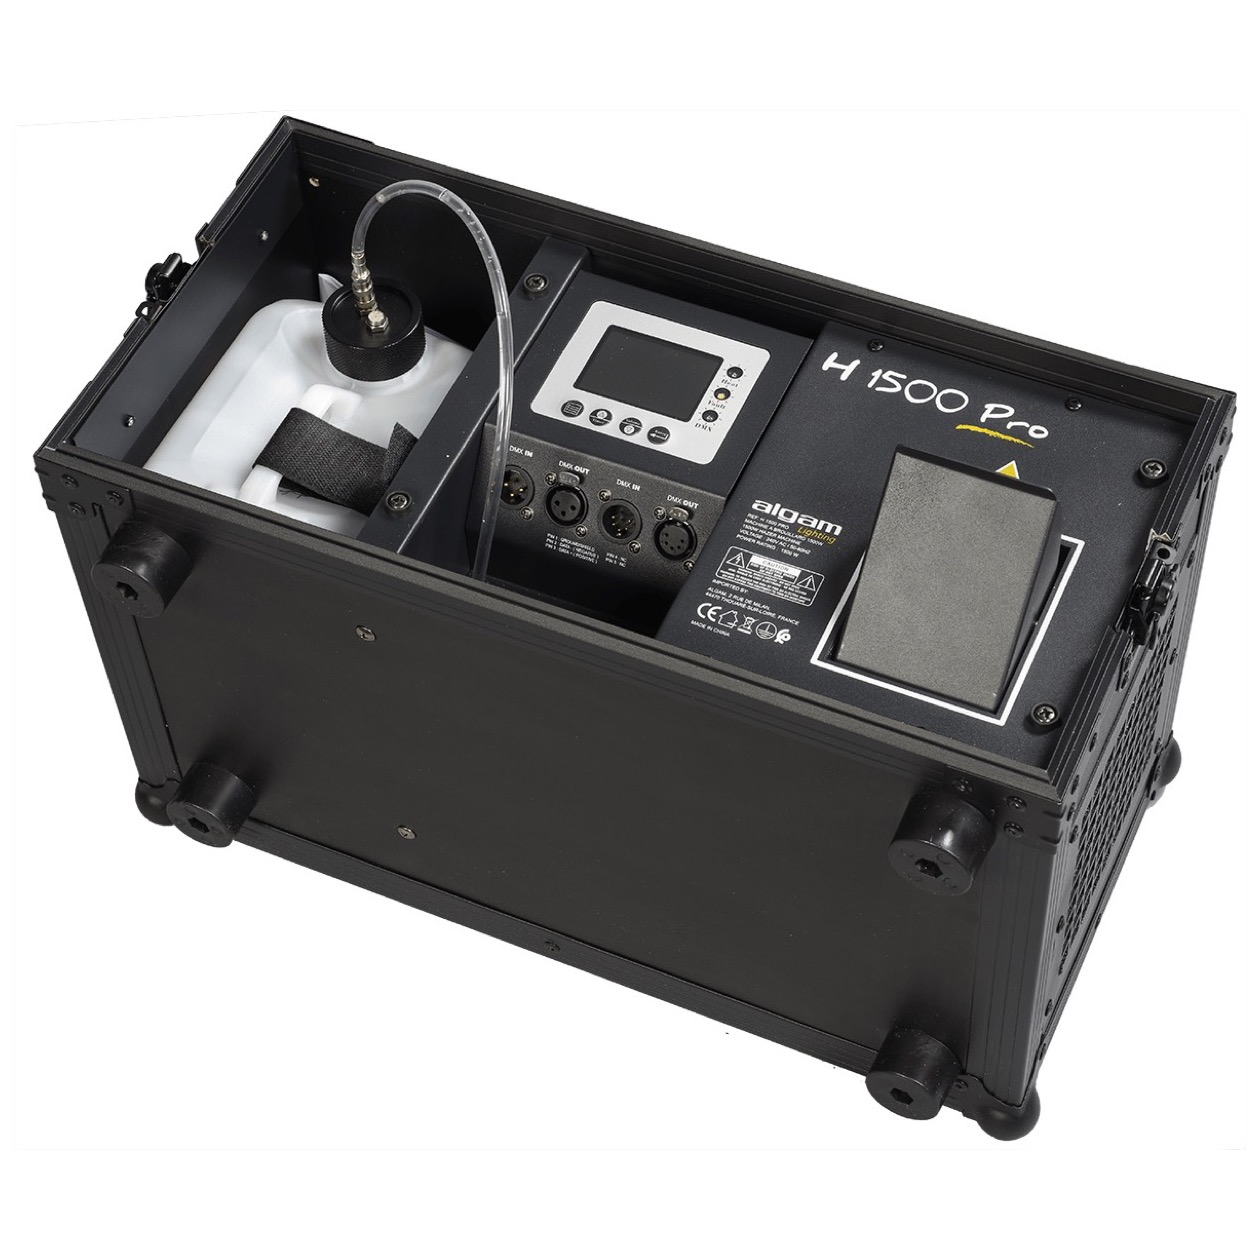 Algam Lighting H 1500 Pro / H1500 Pro Fog Machine 1500 Watt inclusief Flight Case